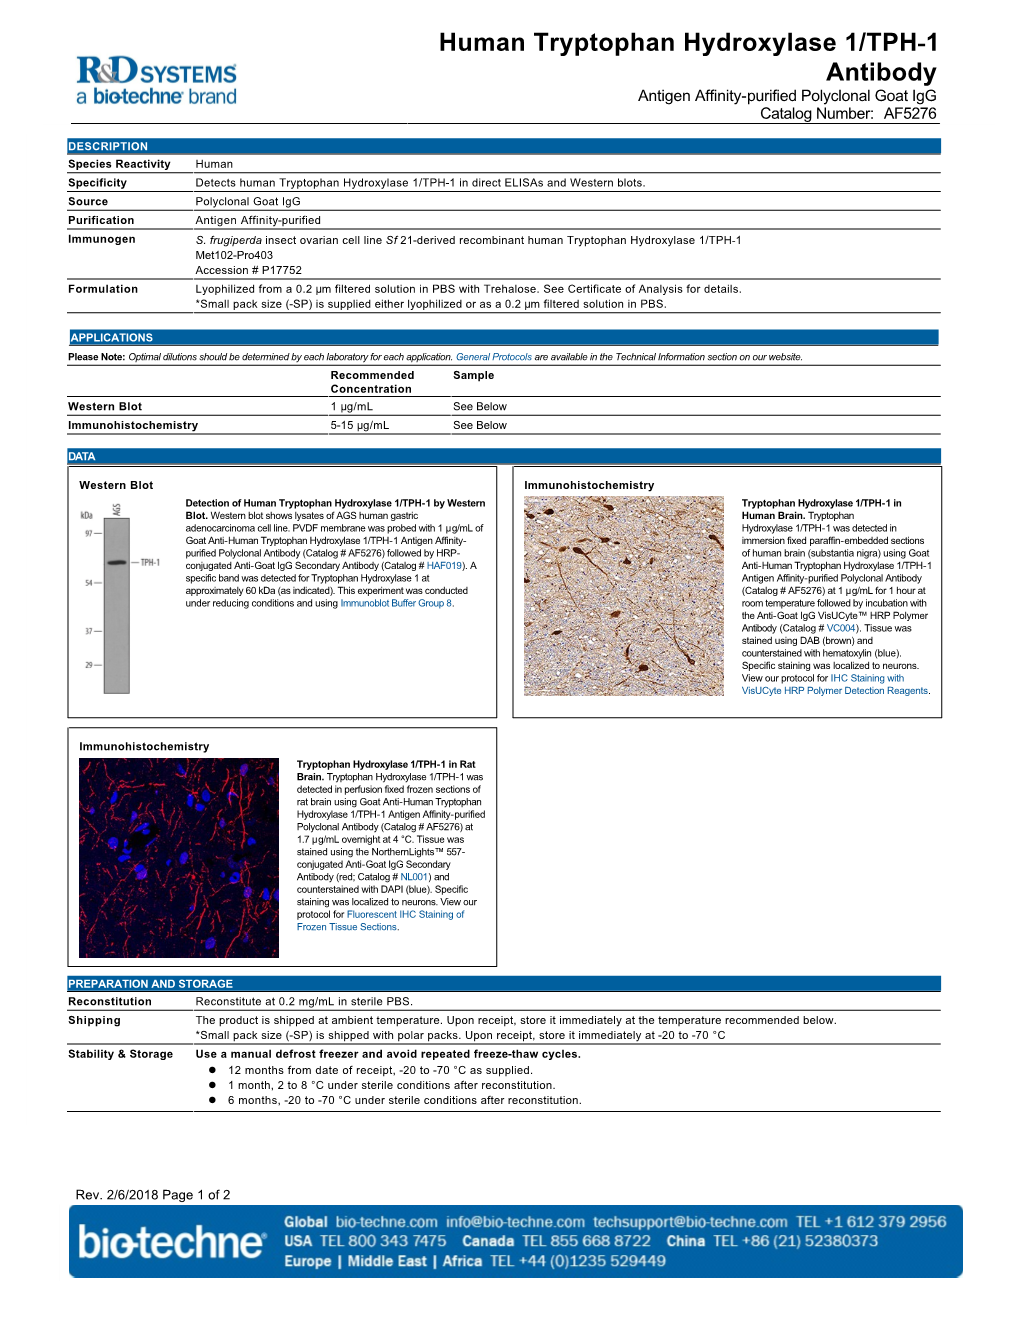 Human Tryptophan Hydroxylase 1/TPH-1 Antibody Antigen Affinity-Purified Polyclonal Goat Igg Catalog Number: AF5276